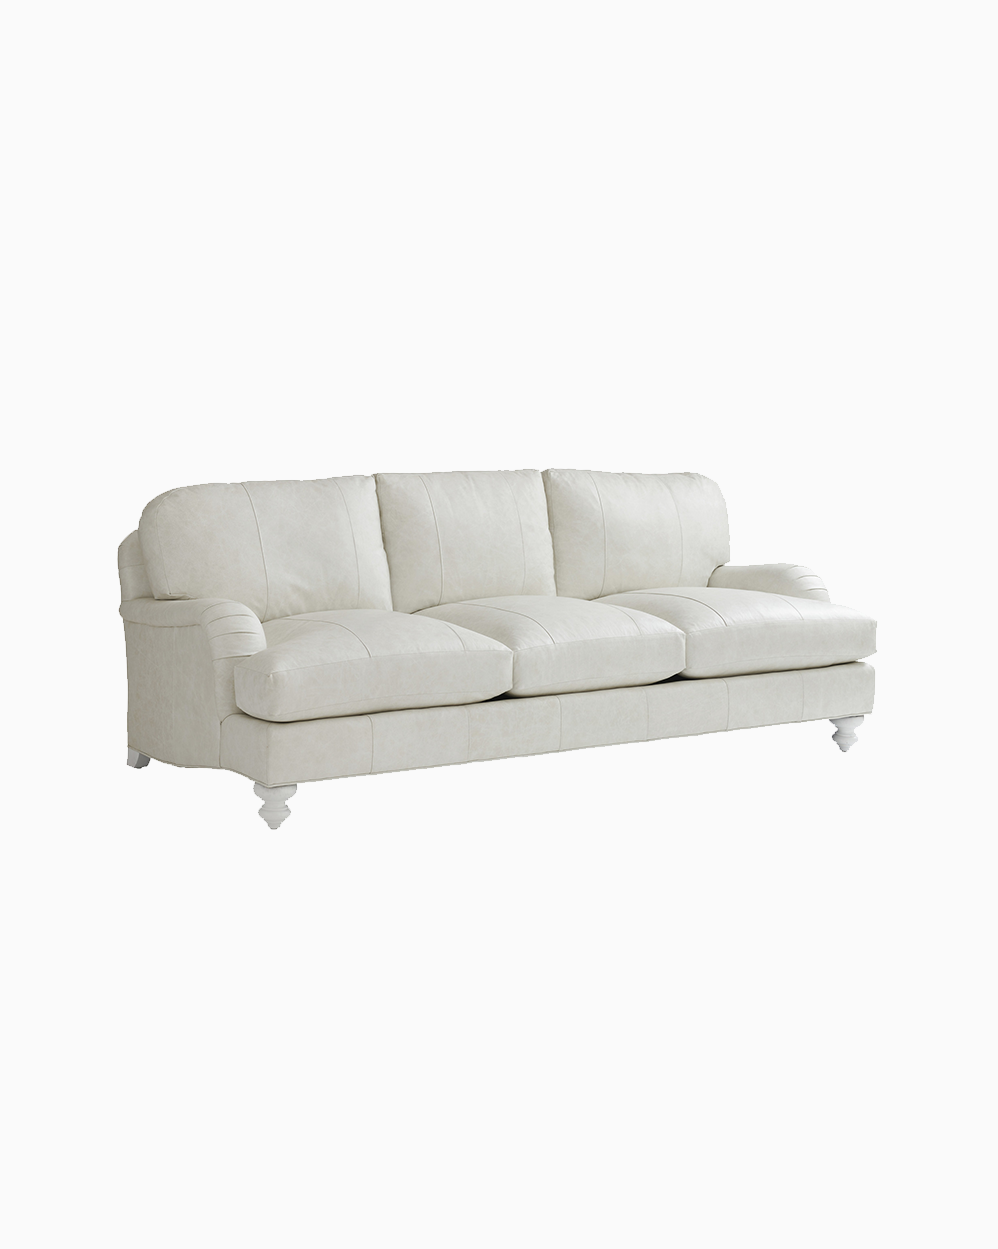 Gilmore Leather Sofa